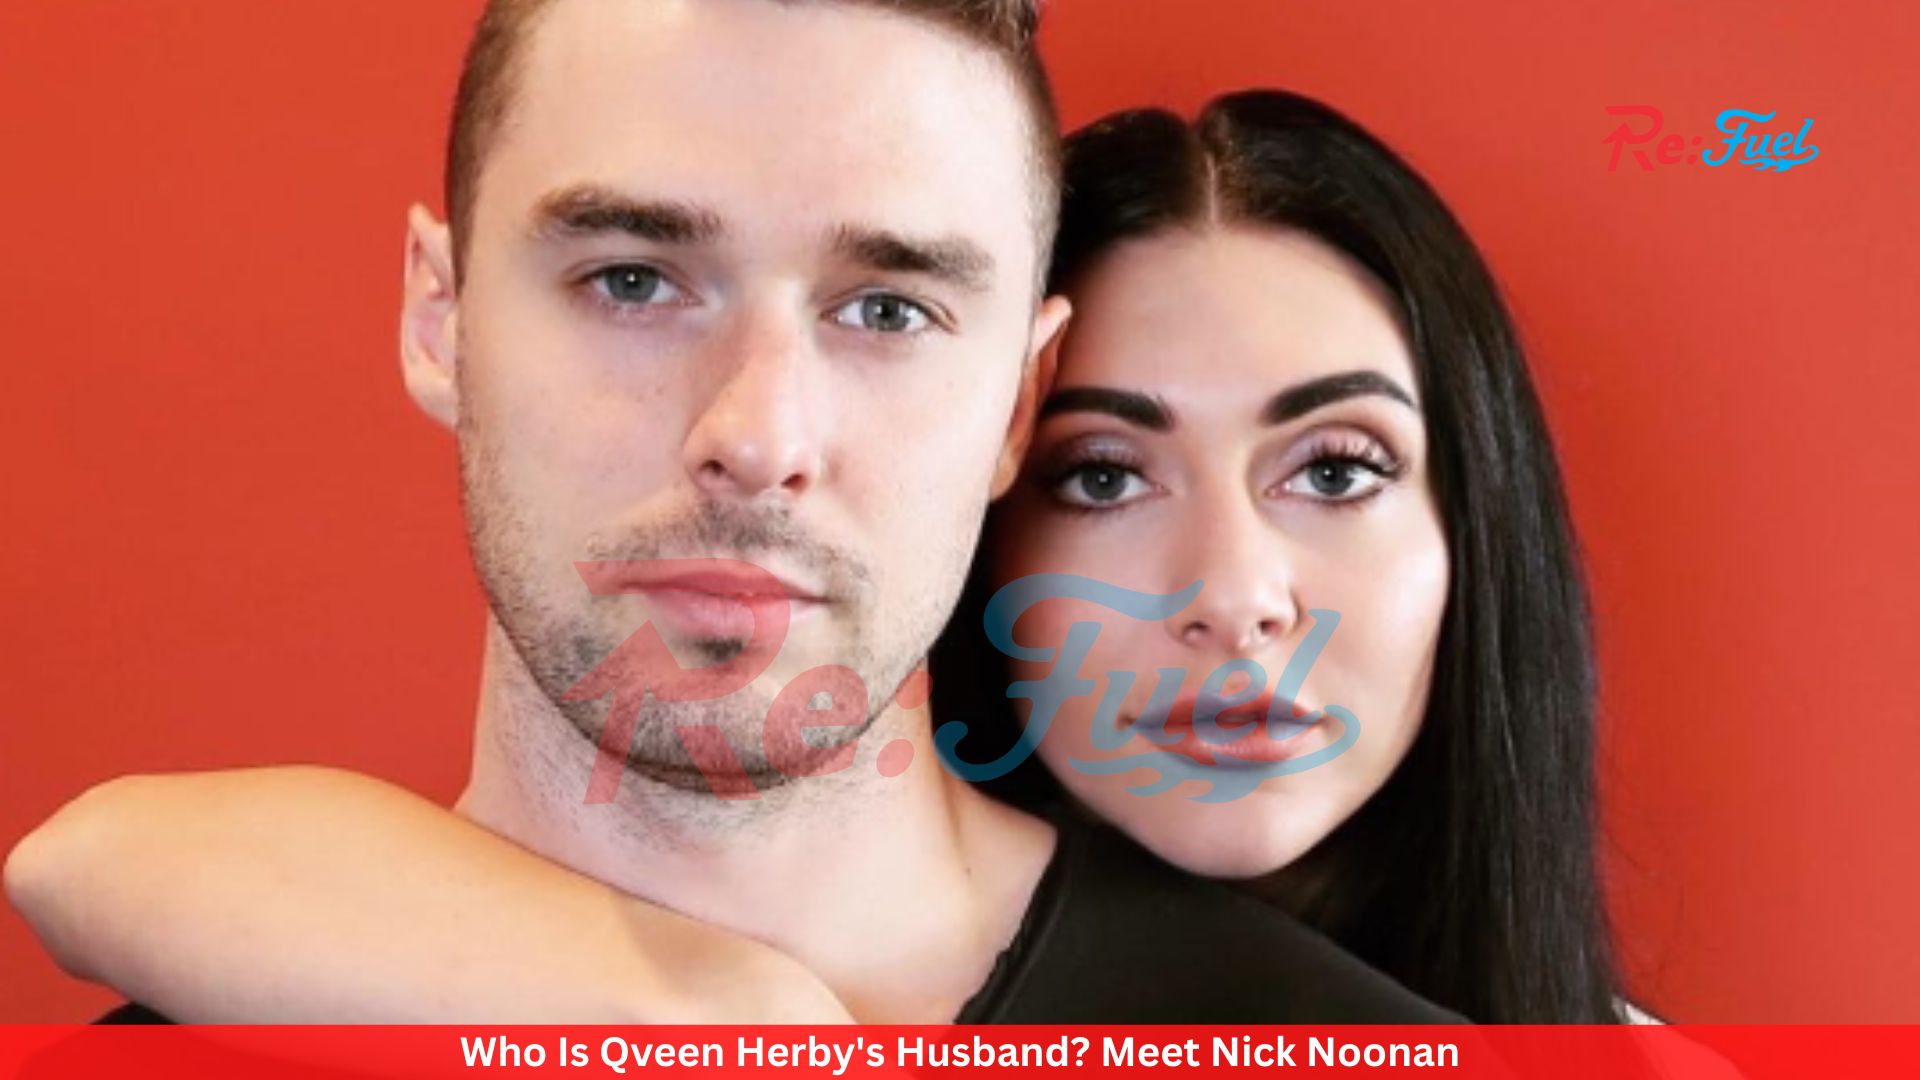 Who Is Qveen Herby's Husband? Meet Nick Noonan